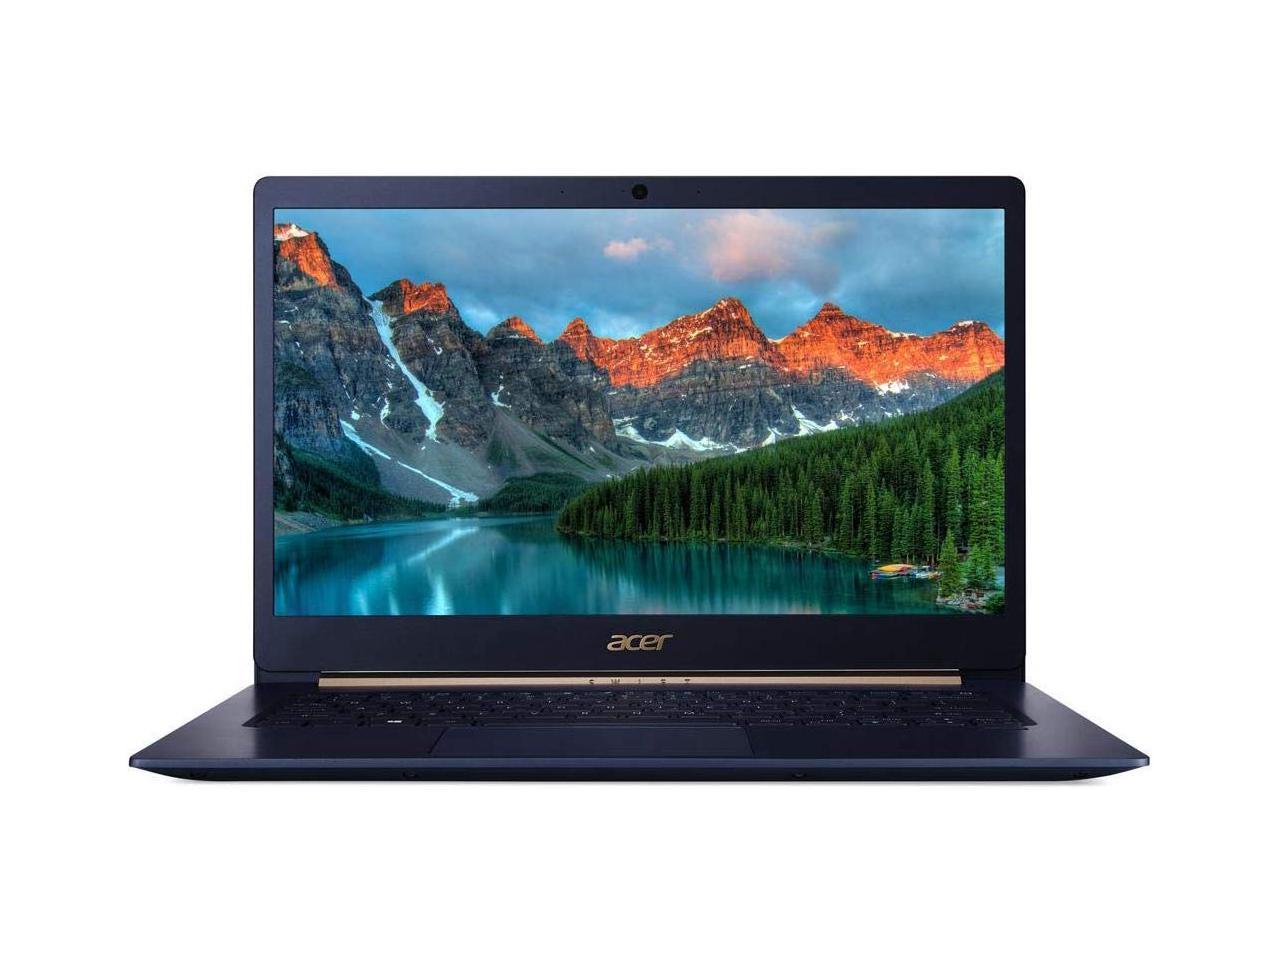 Newest Acer Swift 5 | 15.6 Inch Full HD 1080P Touchscreen Laptop| 8th Gen Intel 4-Core i5-8265U up to 3.9GHz| 8GB DDR4 RAM| 256GB PCIe SSD| Fingerprint Reader|HDMI | Windows 10